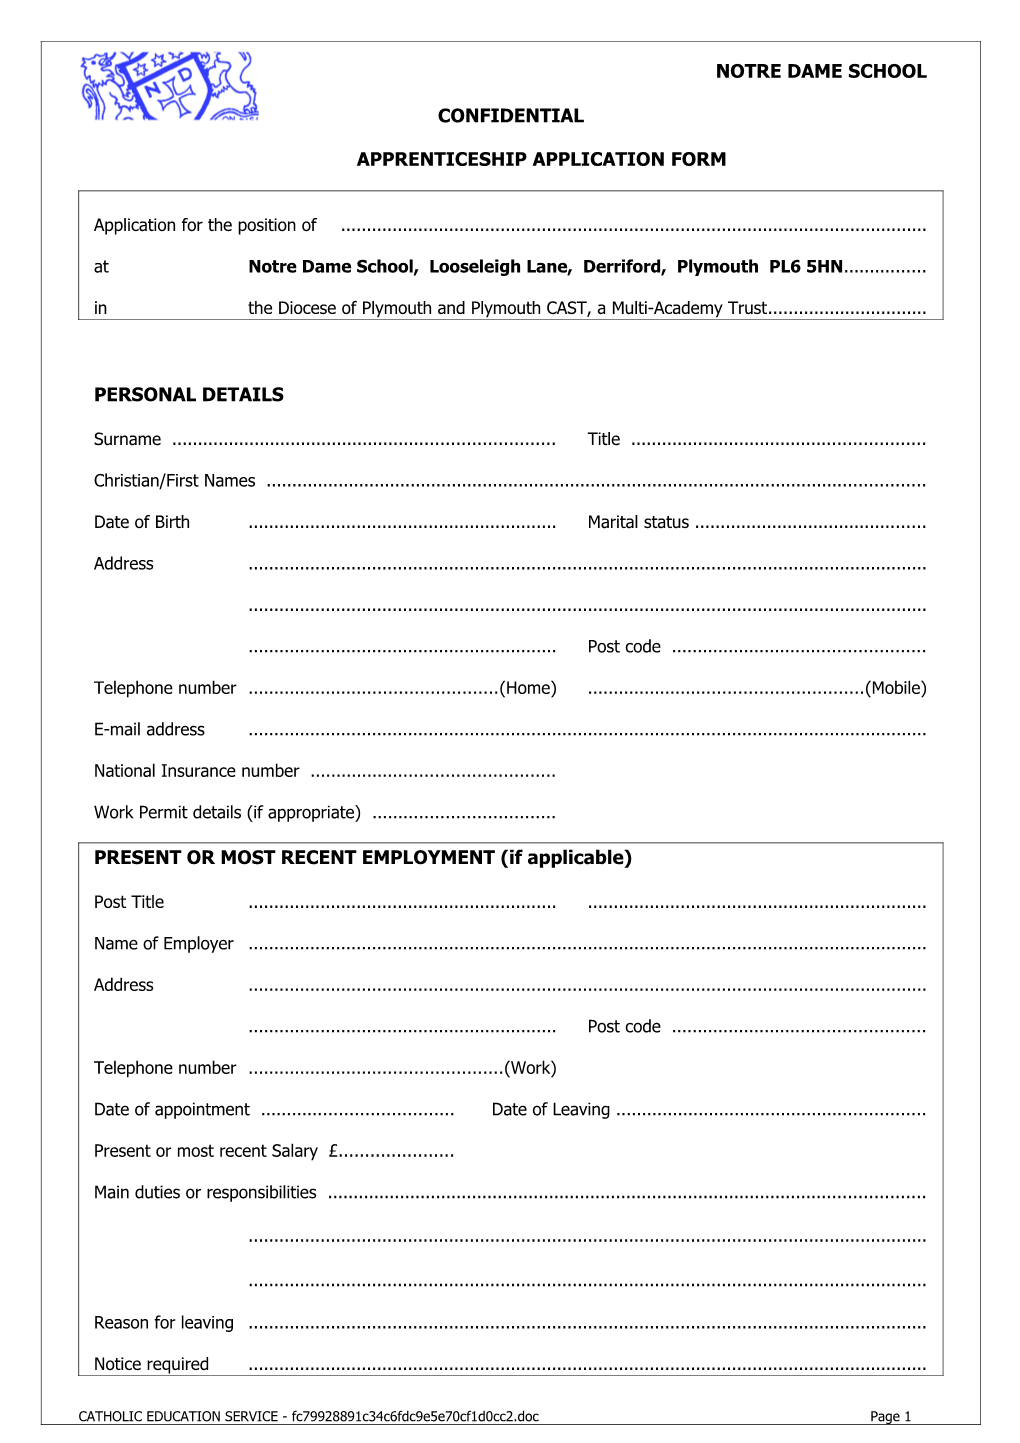 Apprenticeship Application Form s1